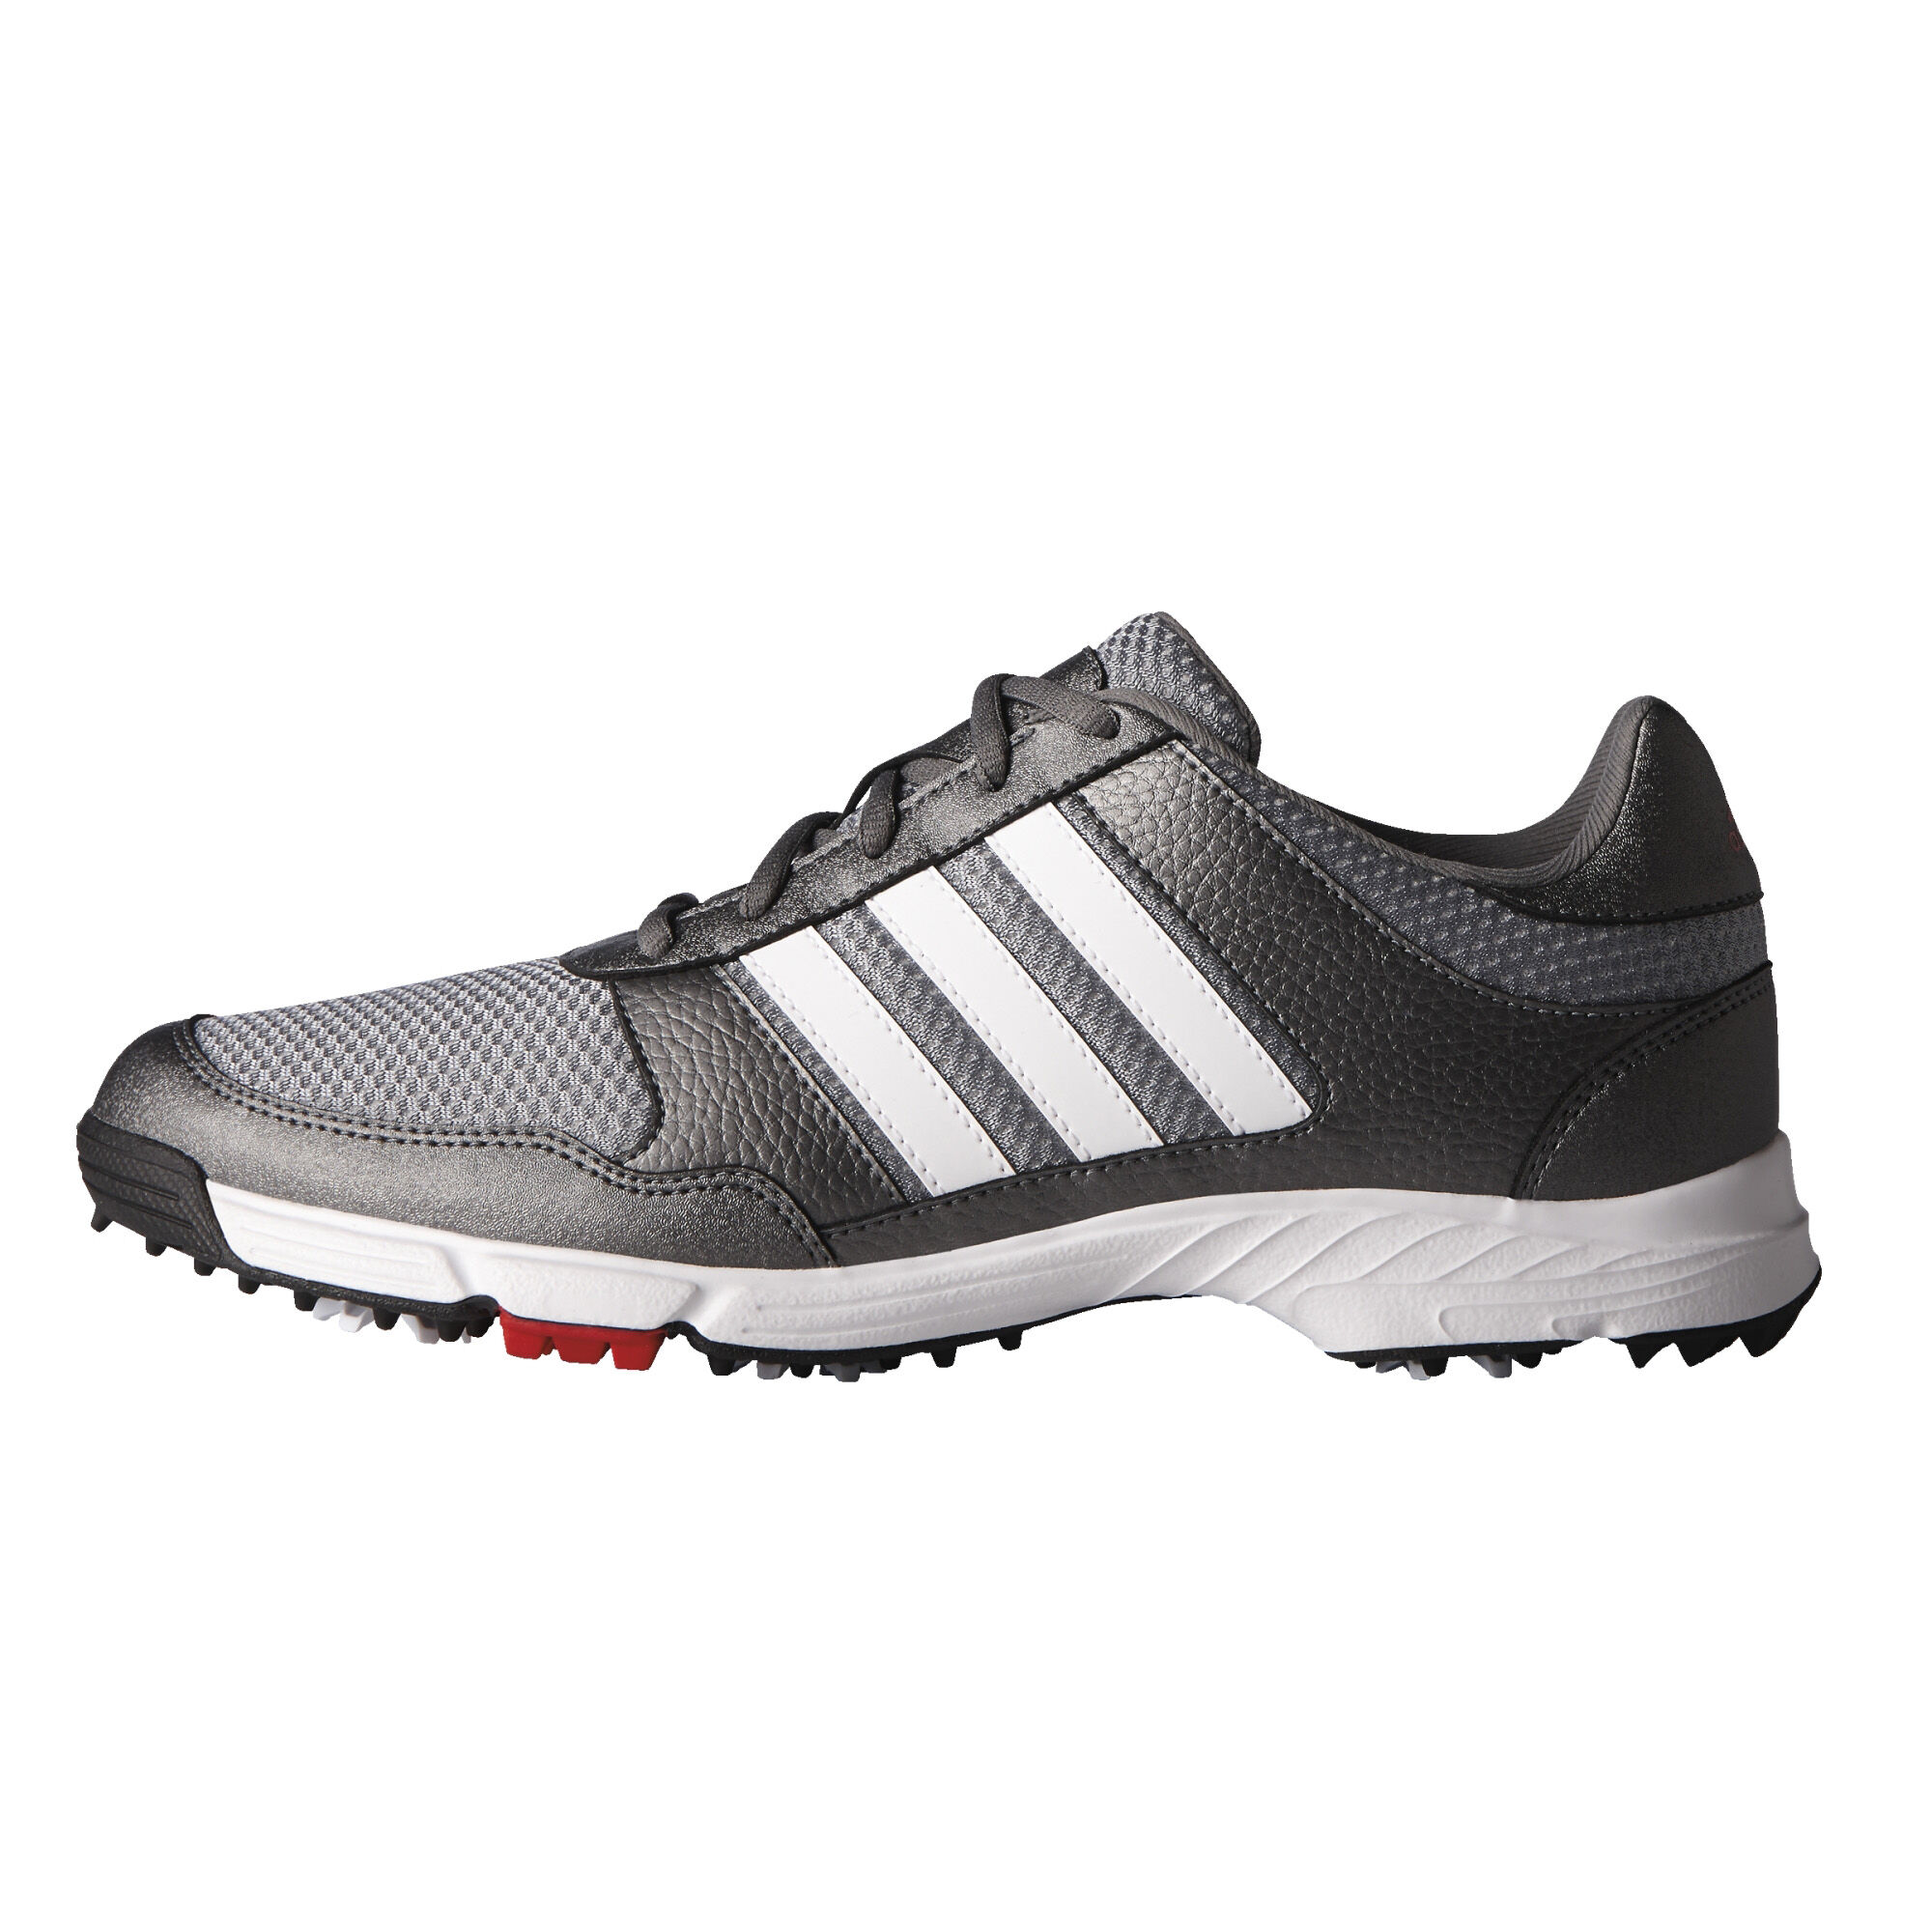 adidas silver golf shoes